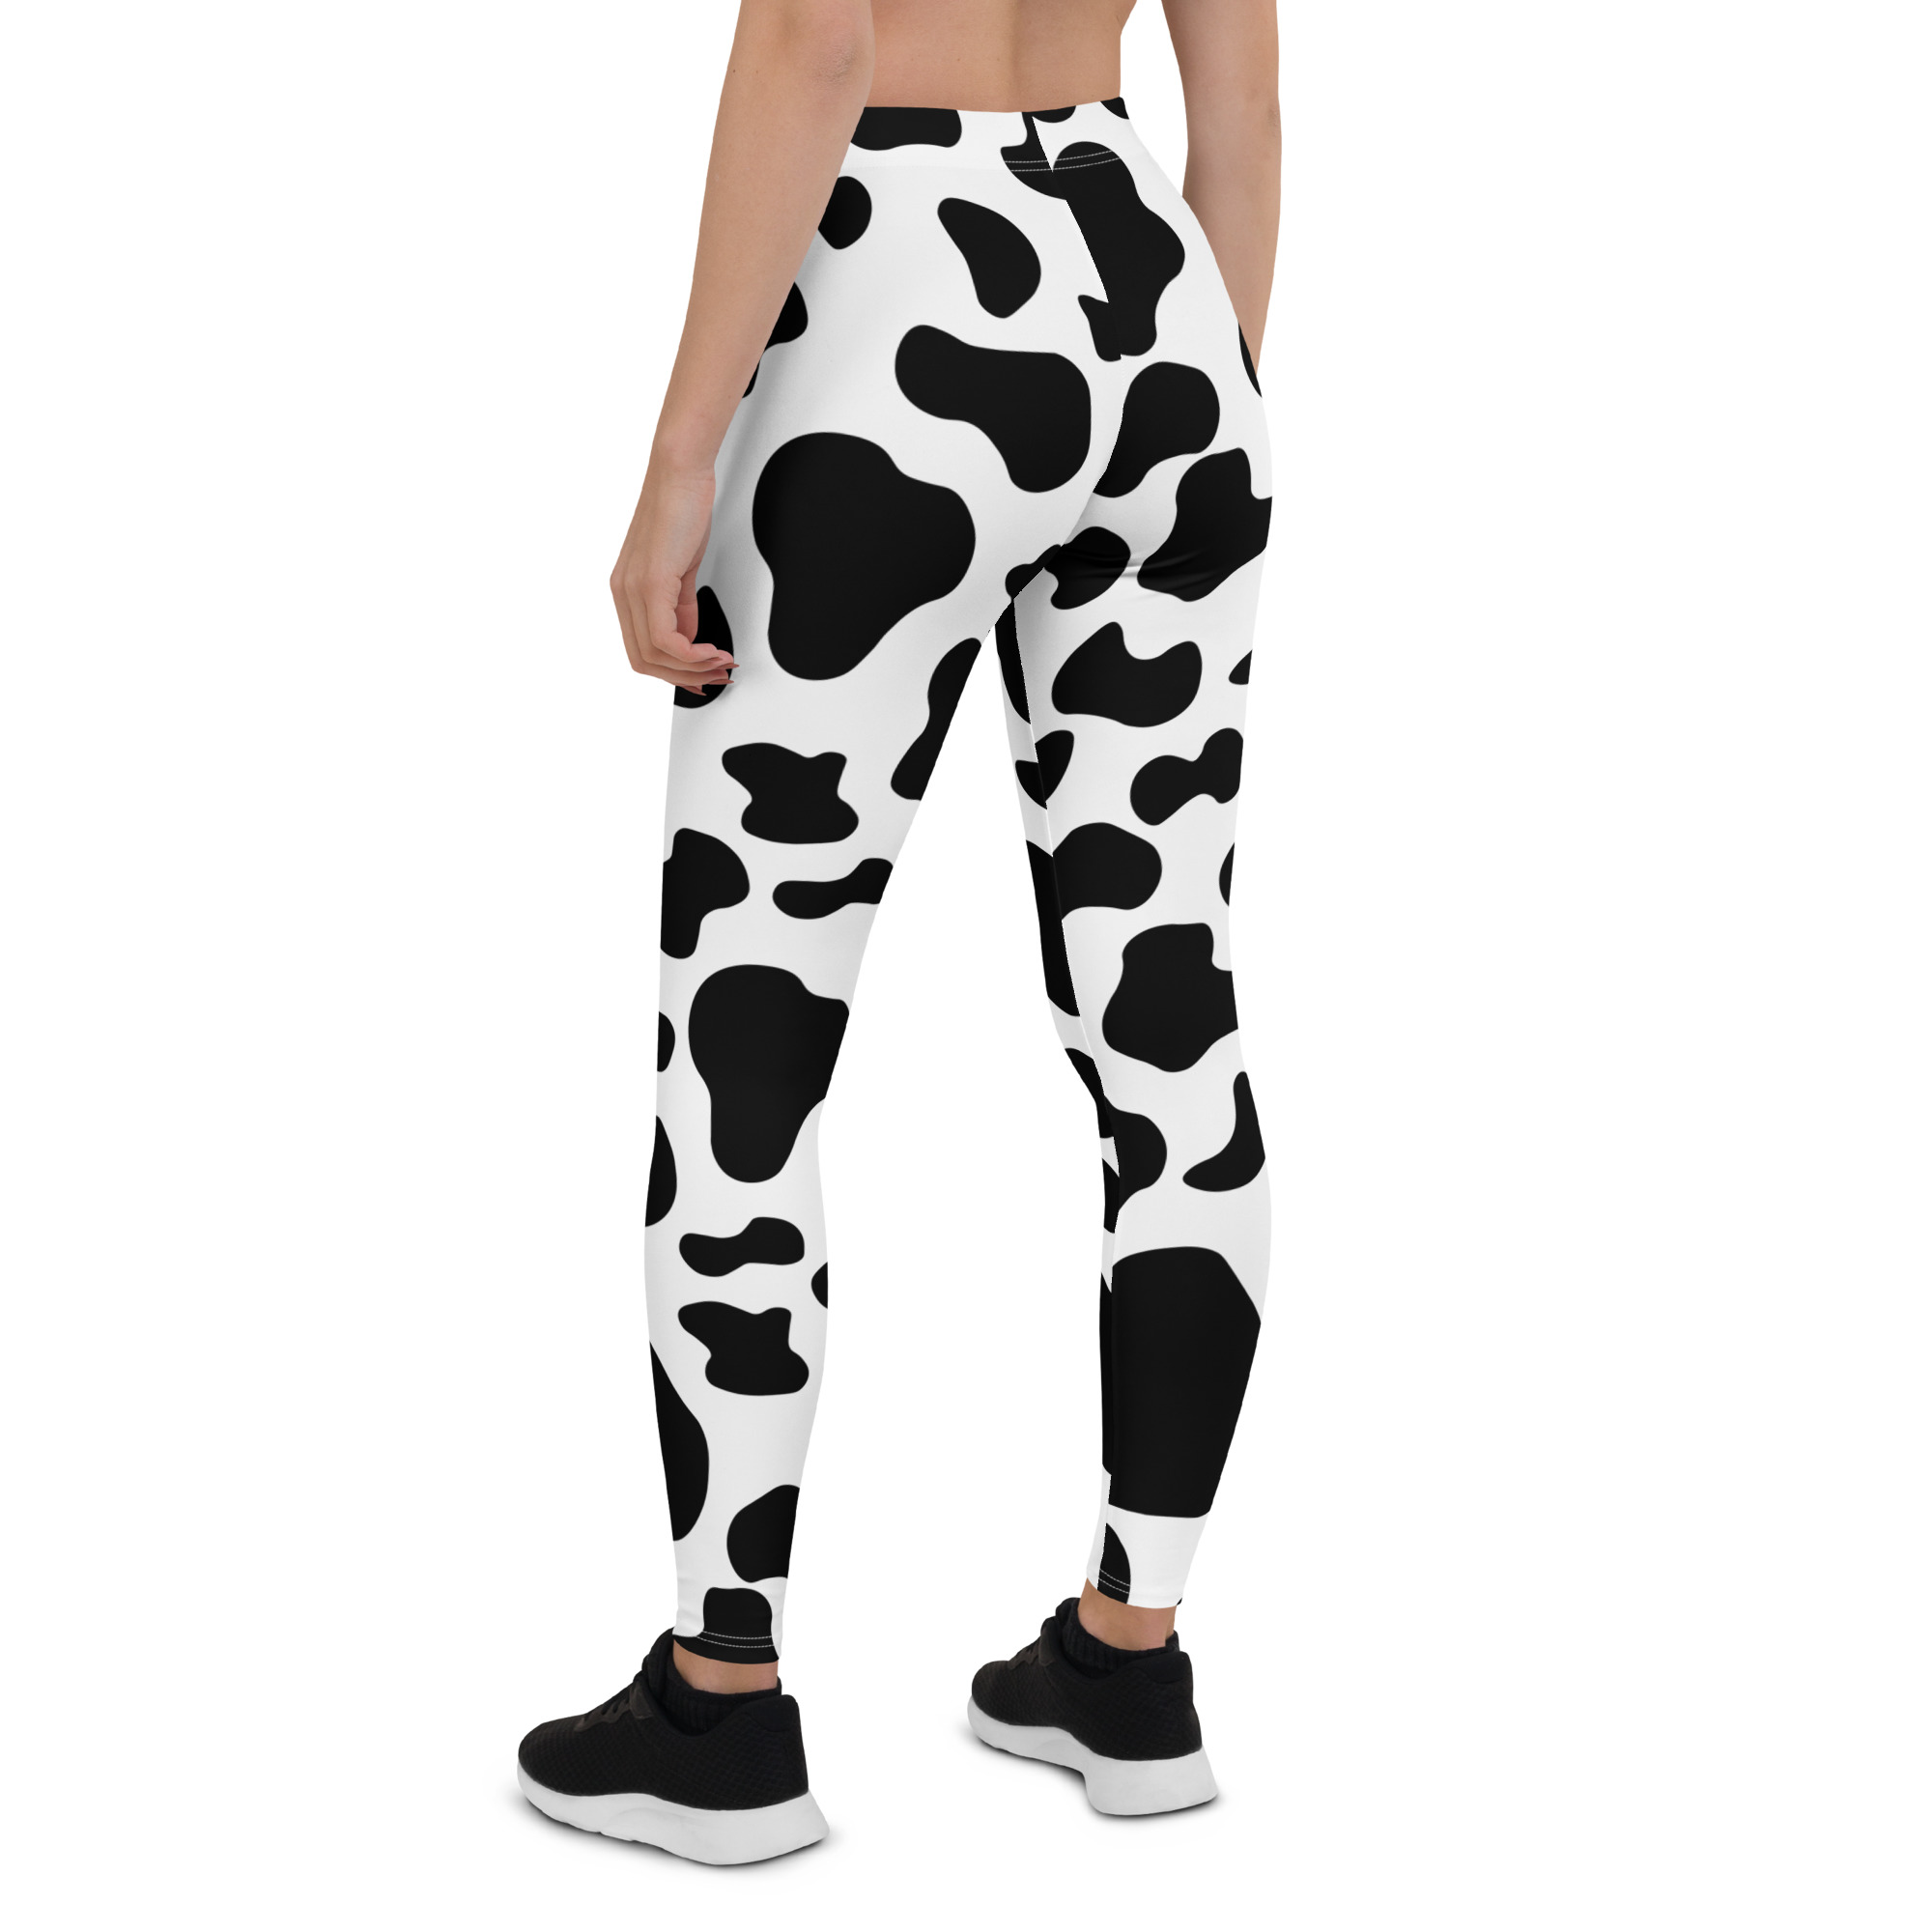 Fresian Cow print Stretch Funky Leggings. PLUS SIZE. New.